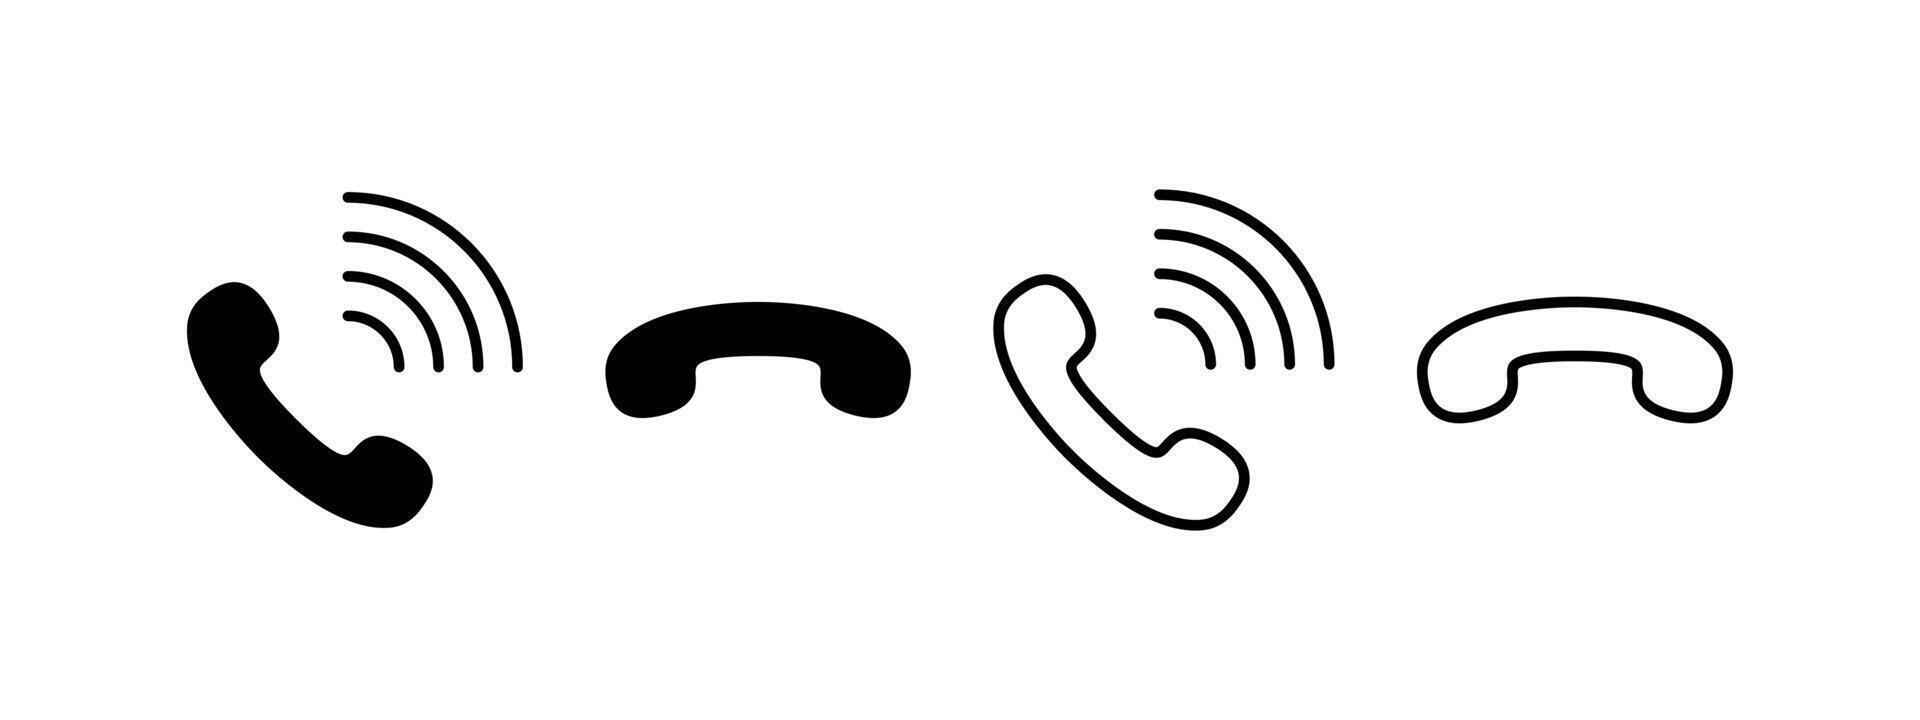 Klingeln Telefon Symbole. Vektor Symbole